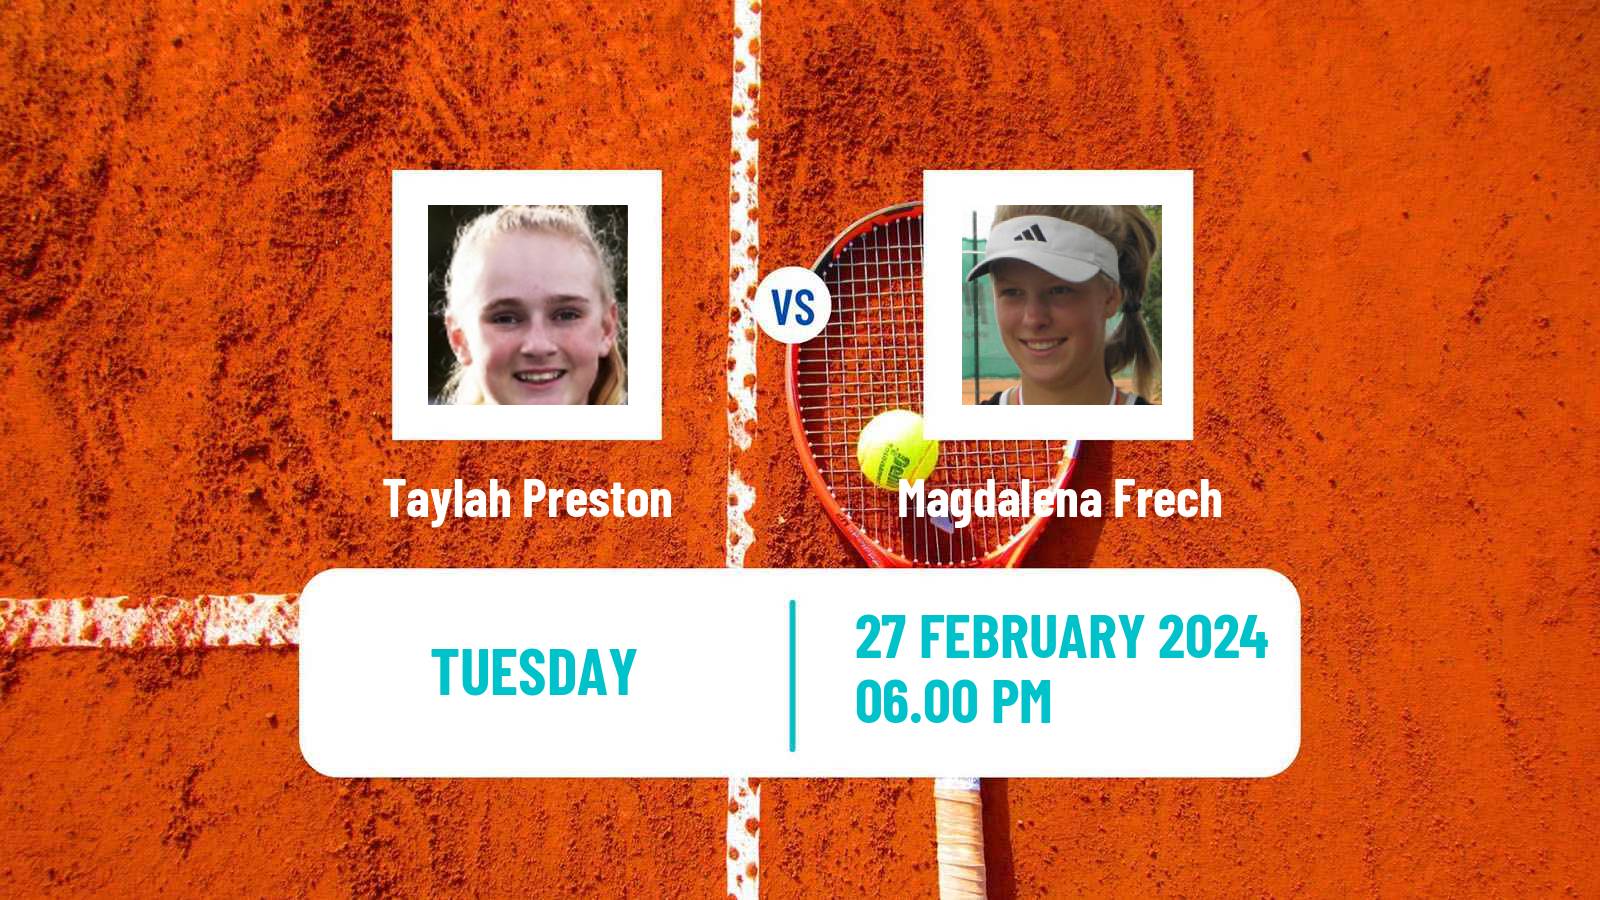 Tennis WTA San Diego Taylah Preston - Magdalena Frech